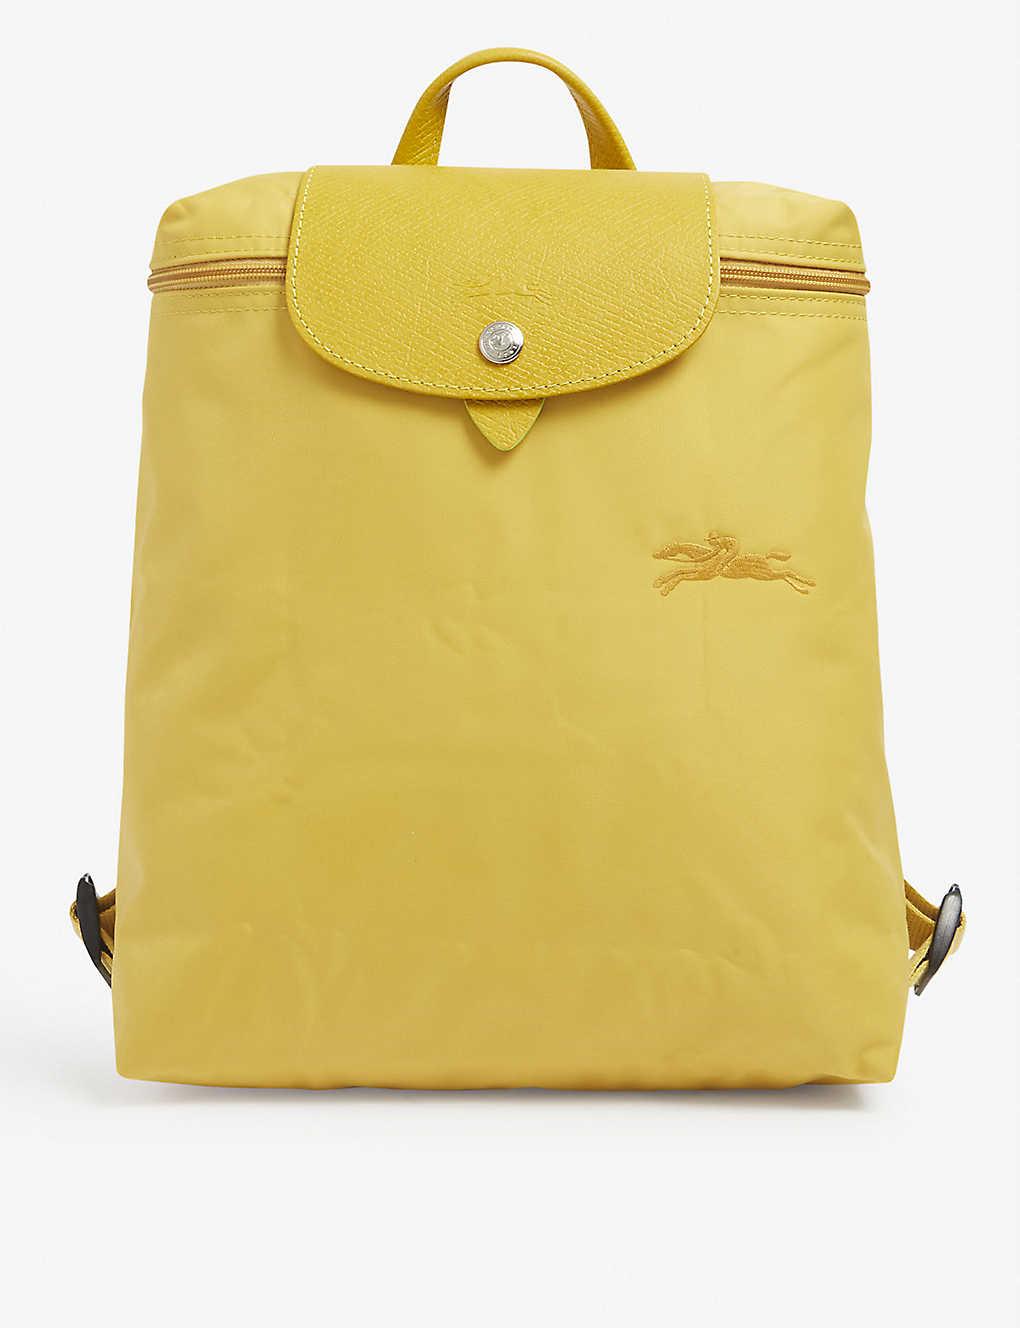 Longchamp + Le Pliage Club Backpack